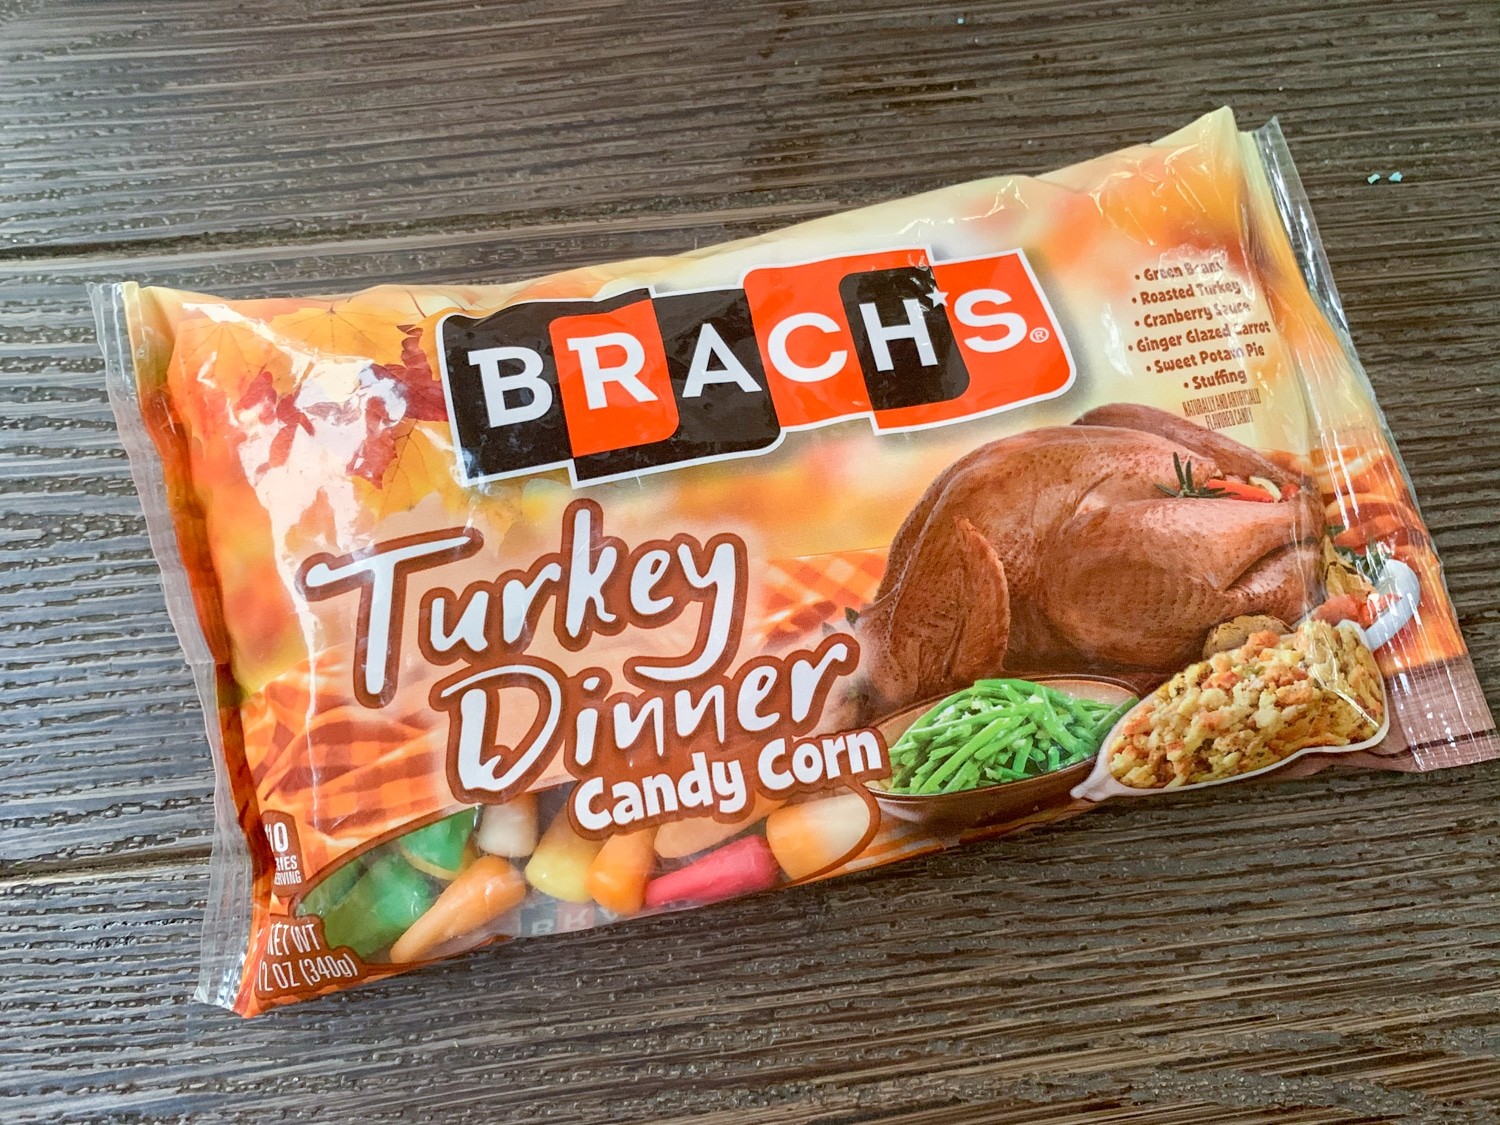 Turkey Dinner Candy Corn-113